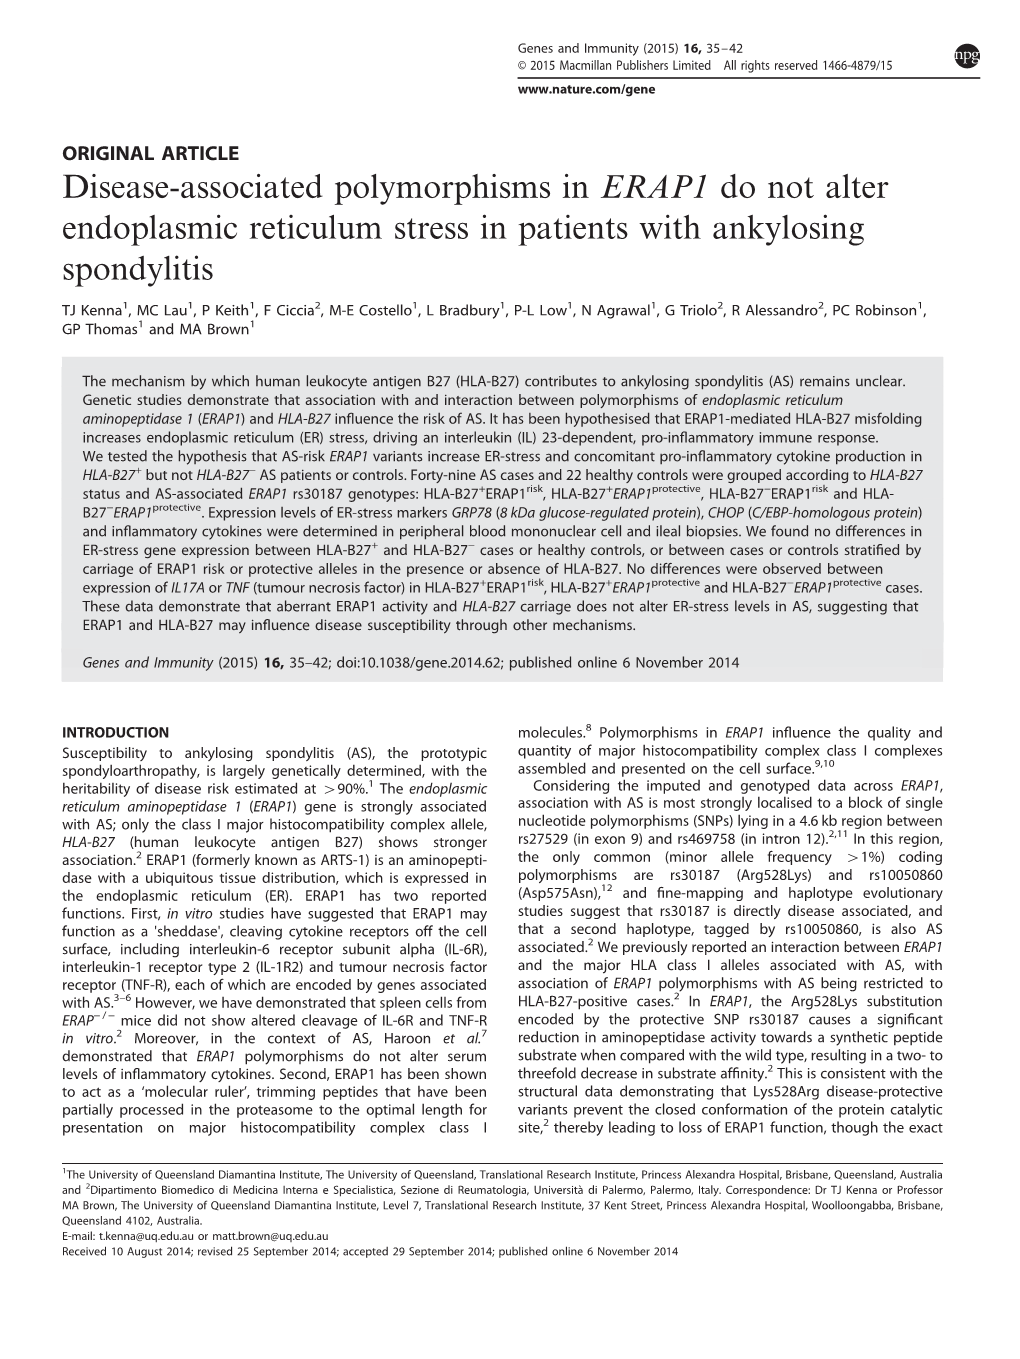 Disease-Associated Polymorphisms in ERAP1 Do Not Alter Endoplasmic Reticulum Stress in Patients with Ankylosing Spondylitis